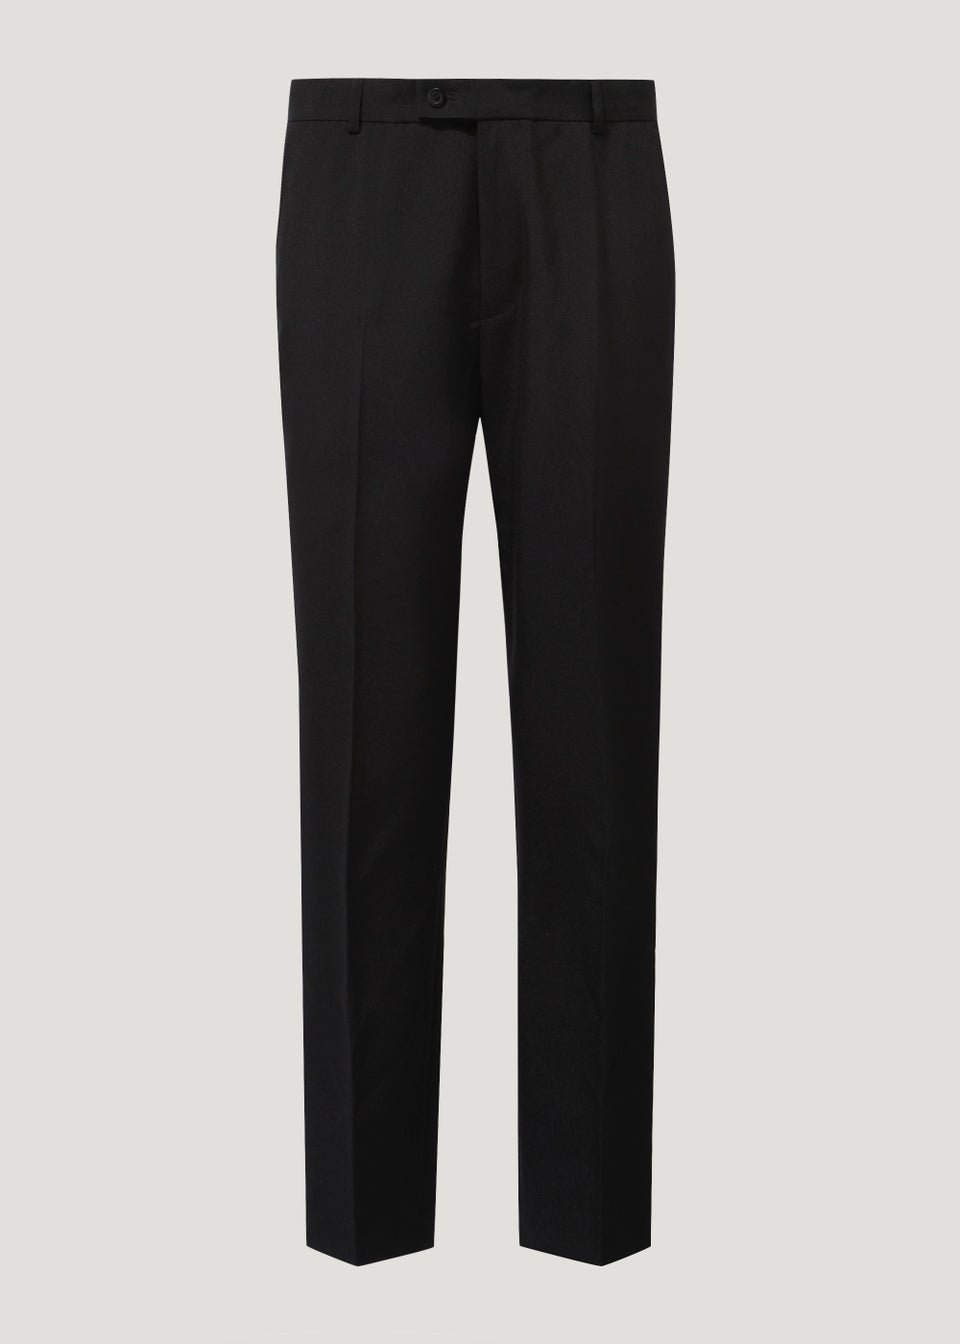 Taylor & Wright Black Regular Fit Formal Trousers - Matalan